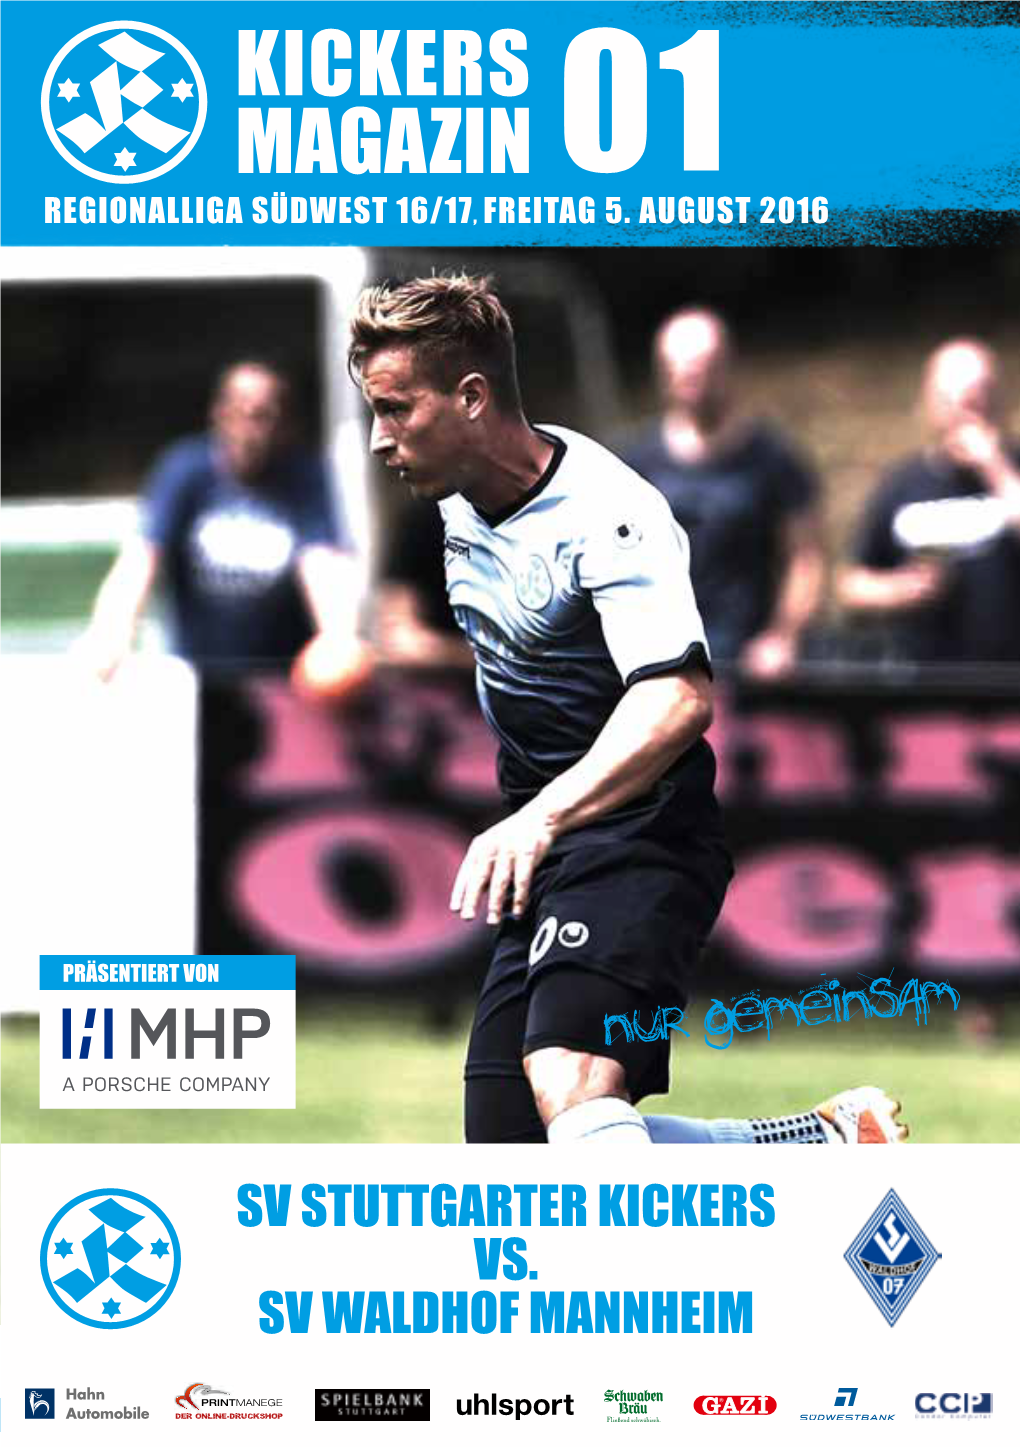 Kickers Magazin 01 Regionalliga Südwest 16/17, Freitag 5